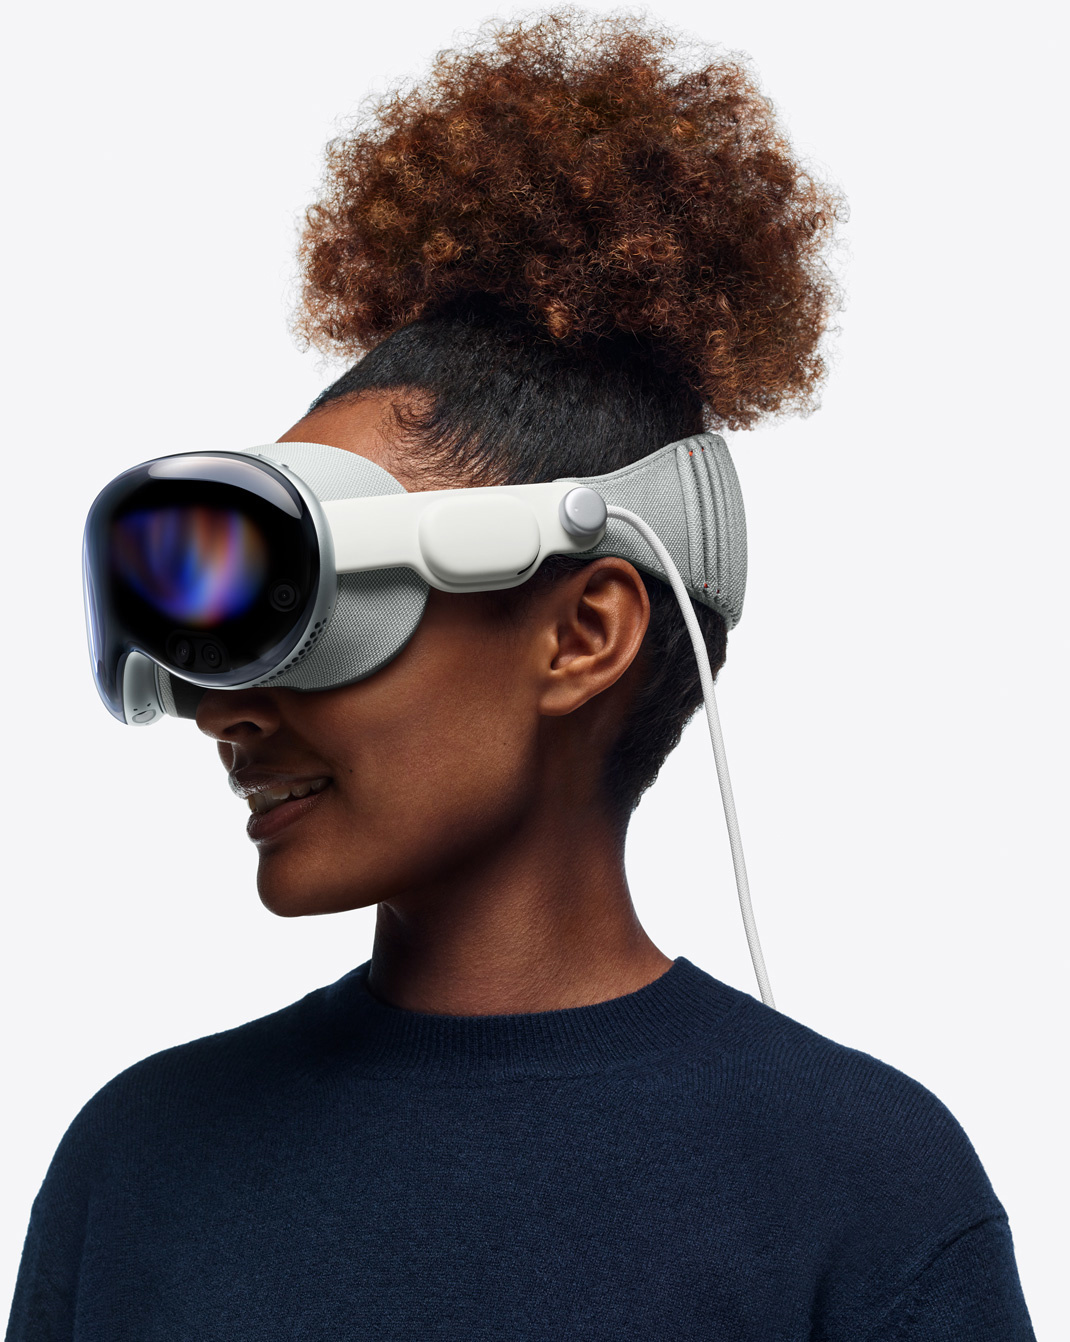 Vision Pro 还引入了 Apple Immersive Video